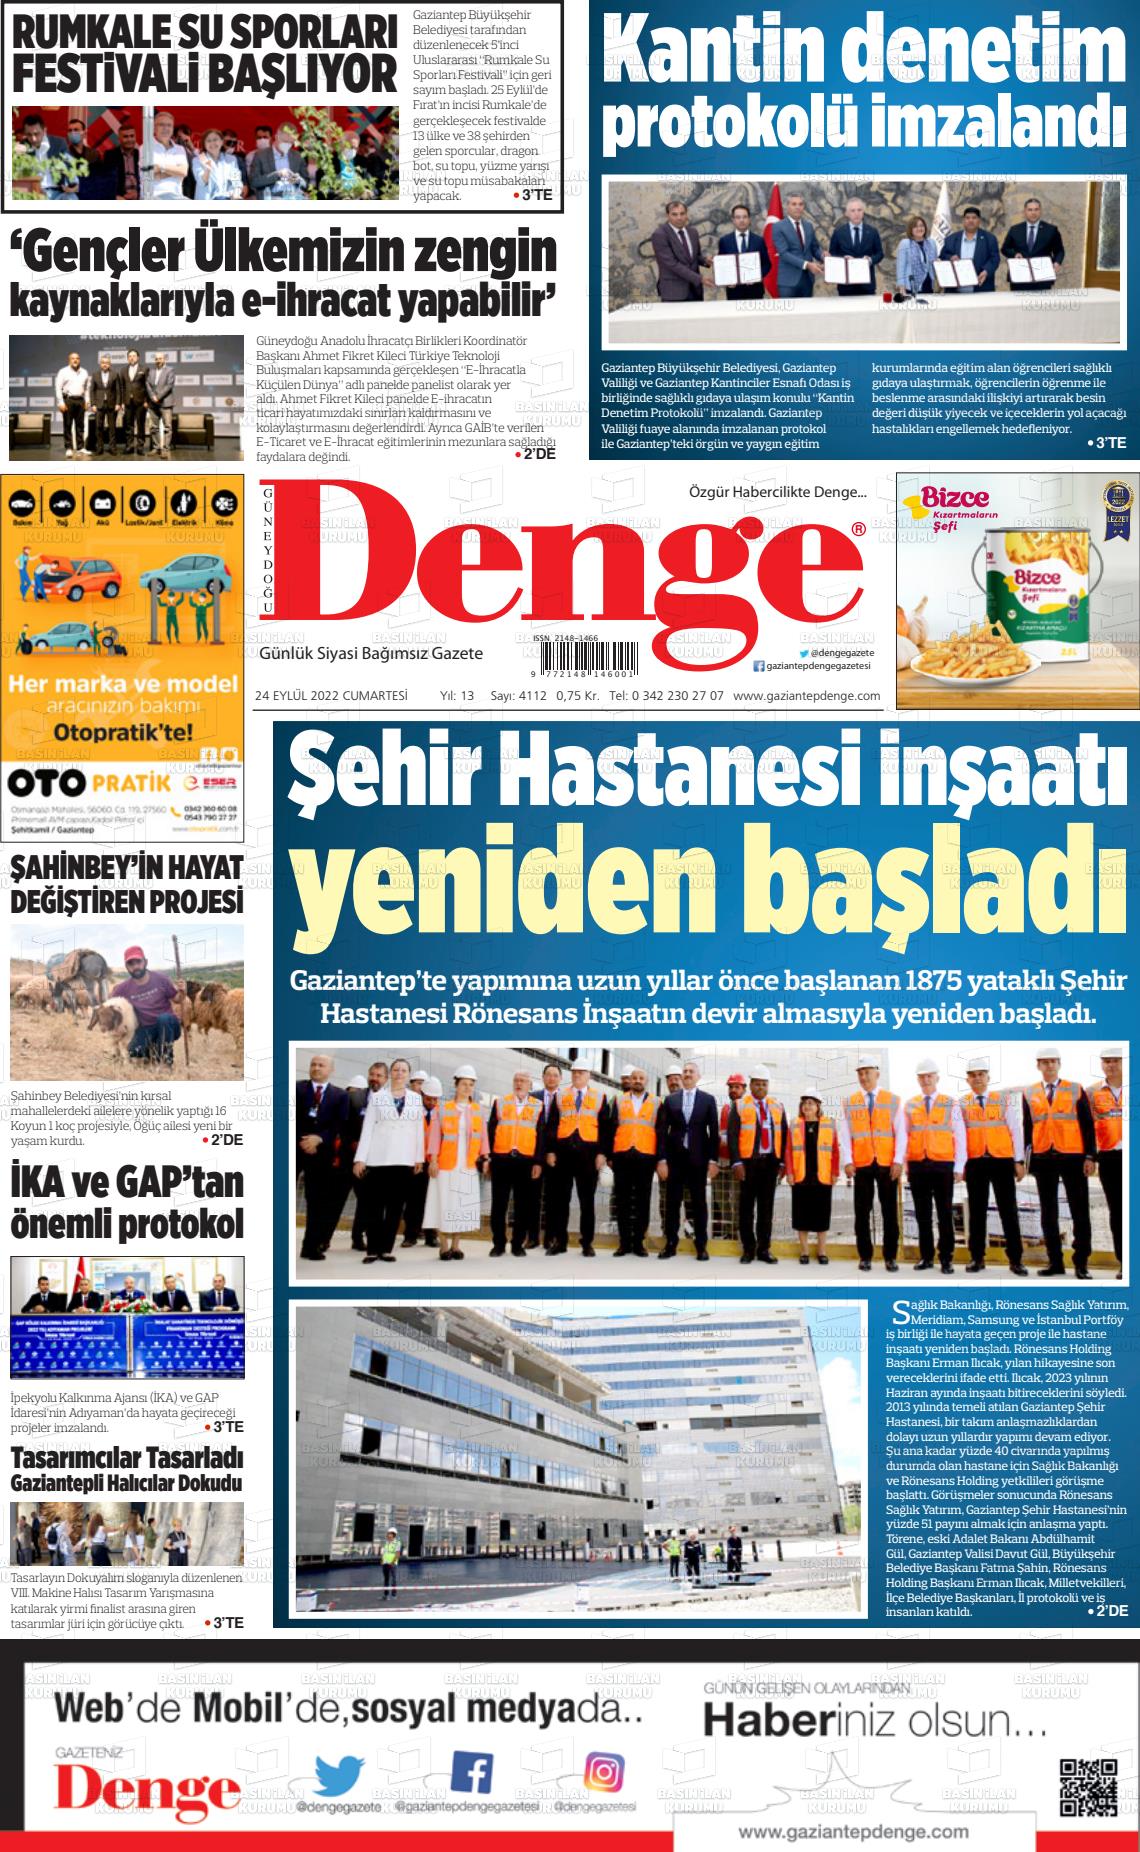 24 Eylül 2022 Gaziantep Denge Gazete Manşeti